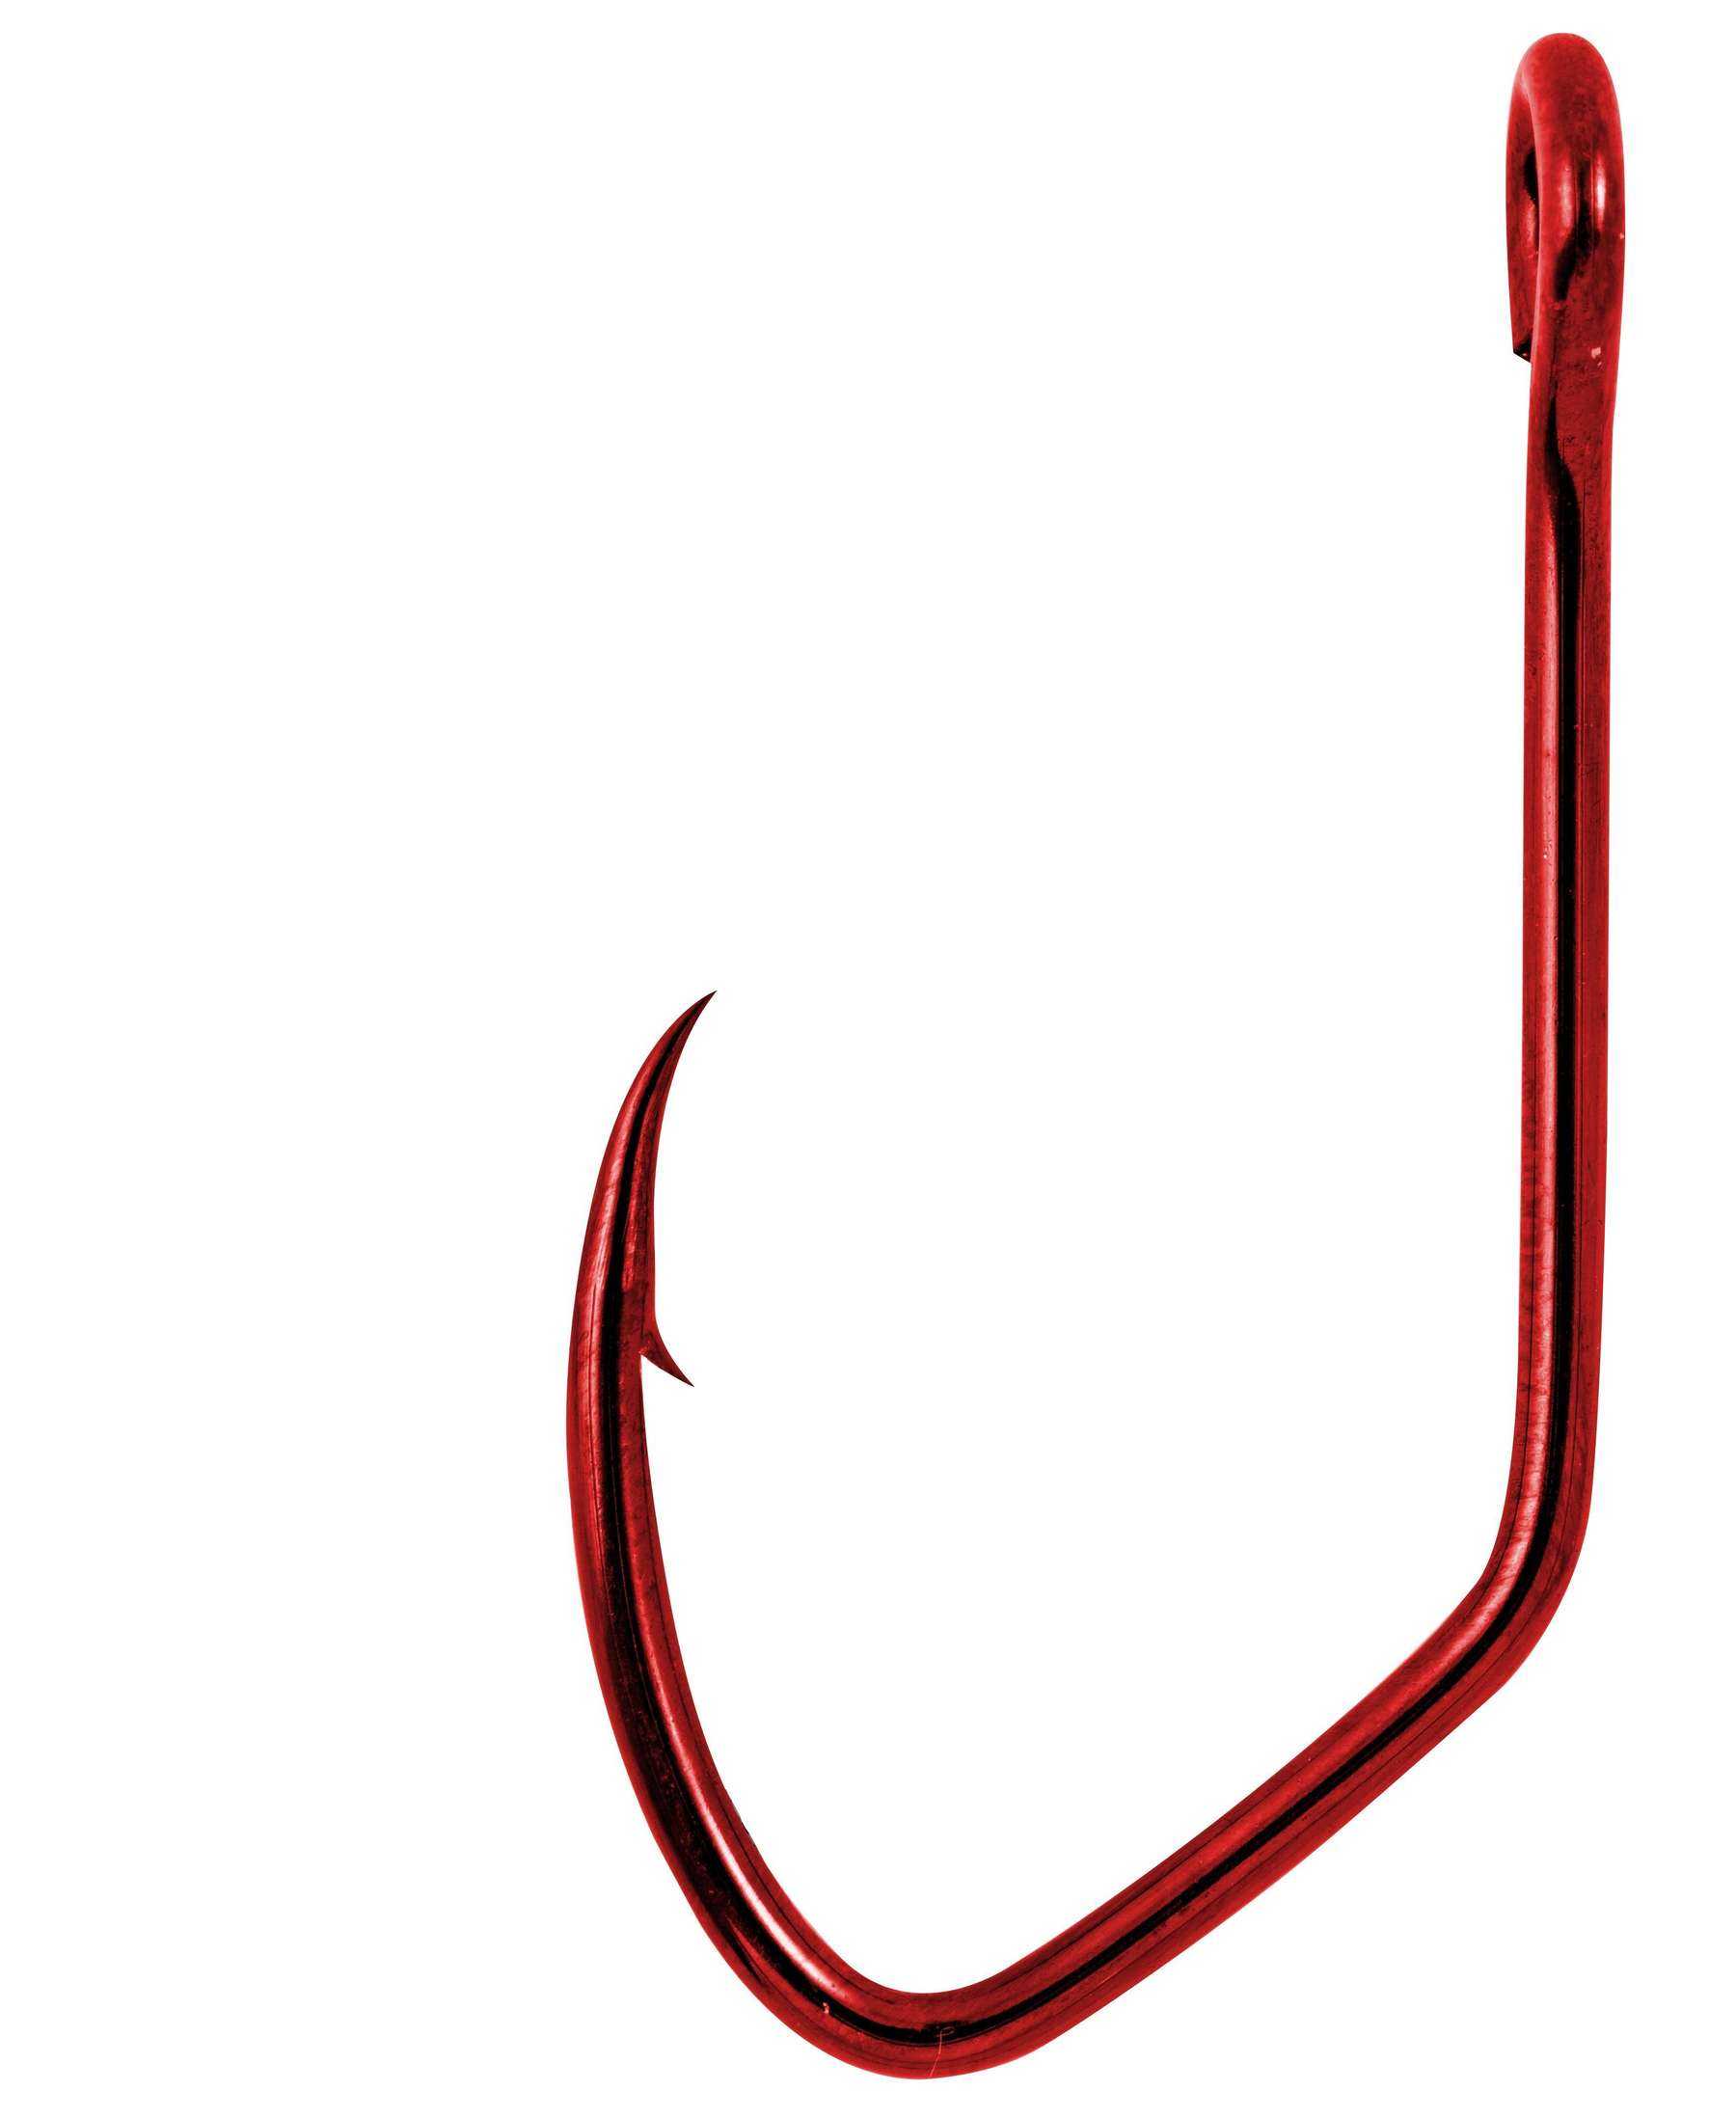 Matzuo Sickle Siwash RC Hook 25 Per Pack Size #6 - Ultra Sharp